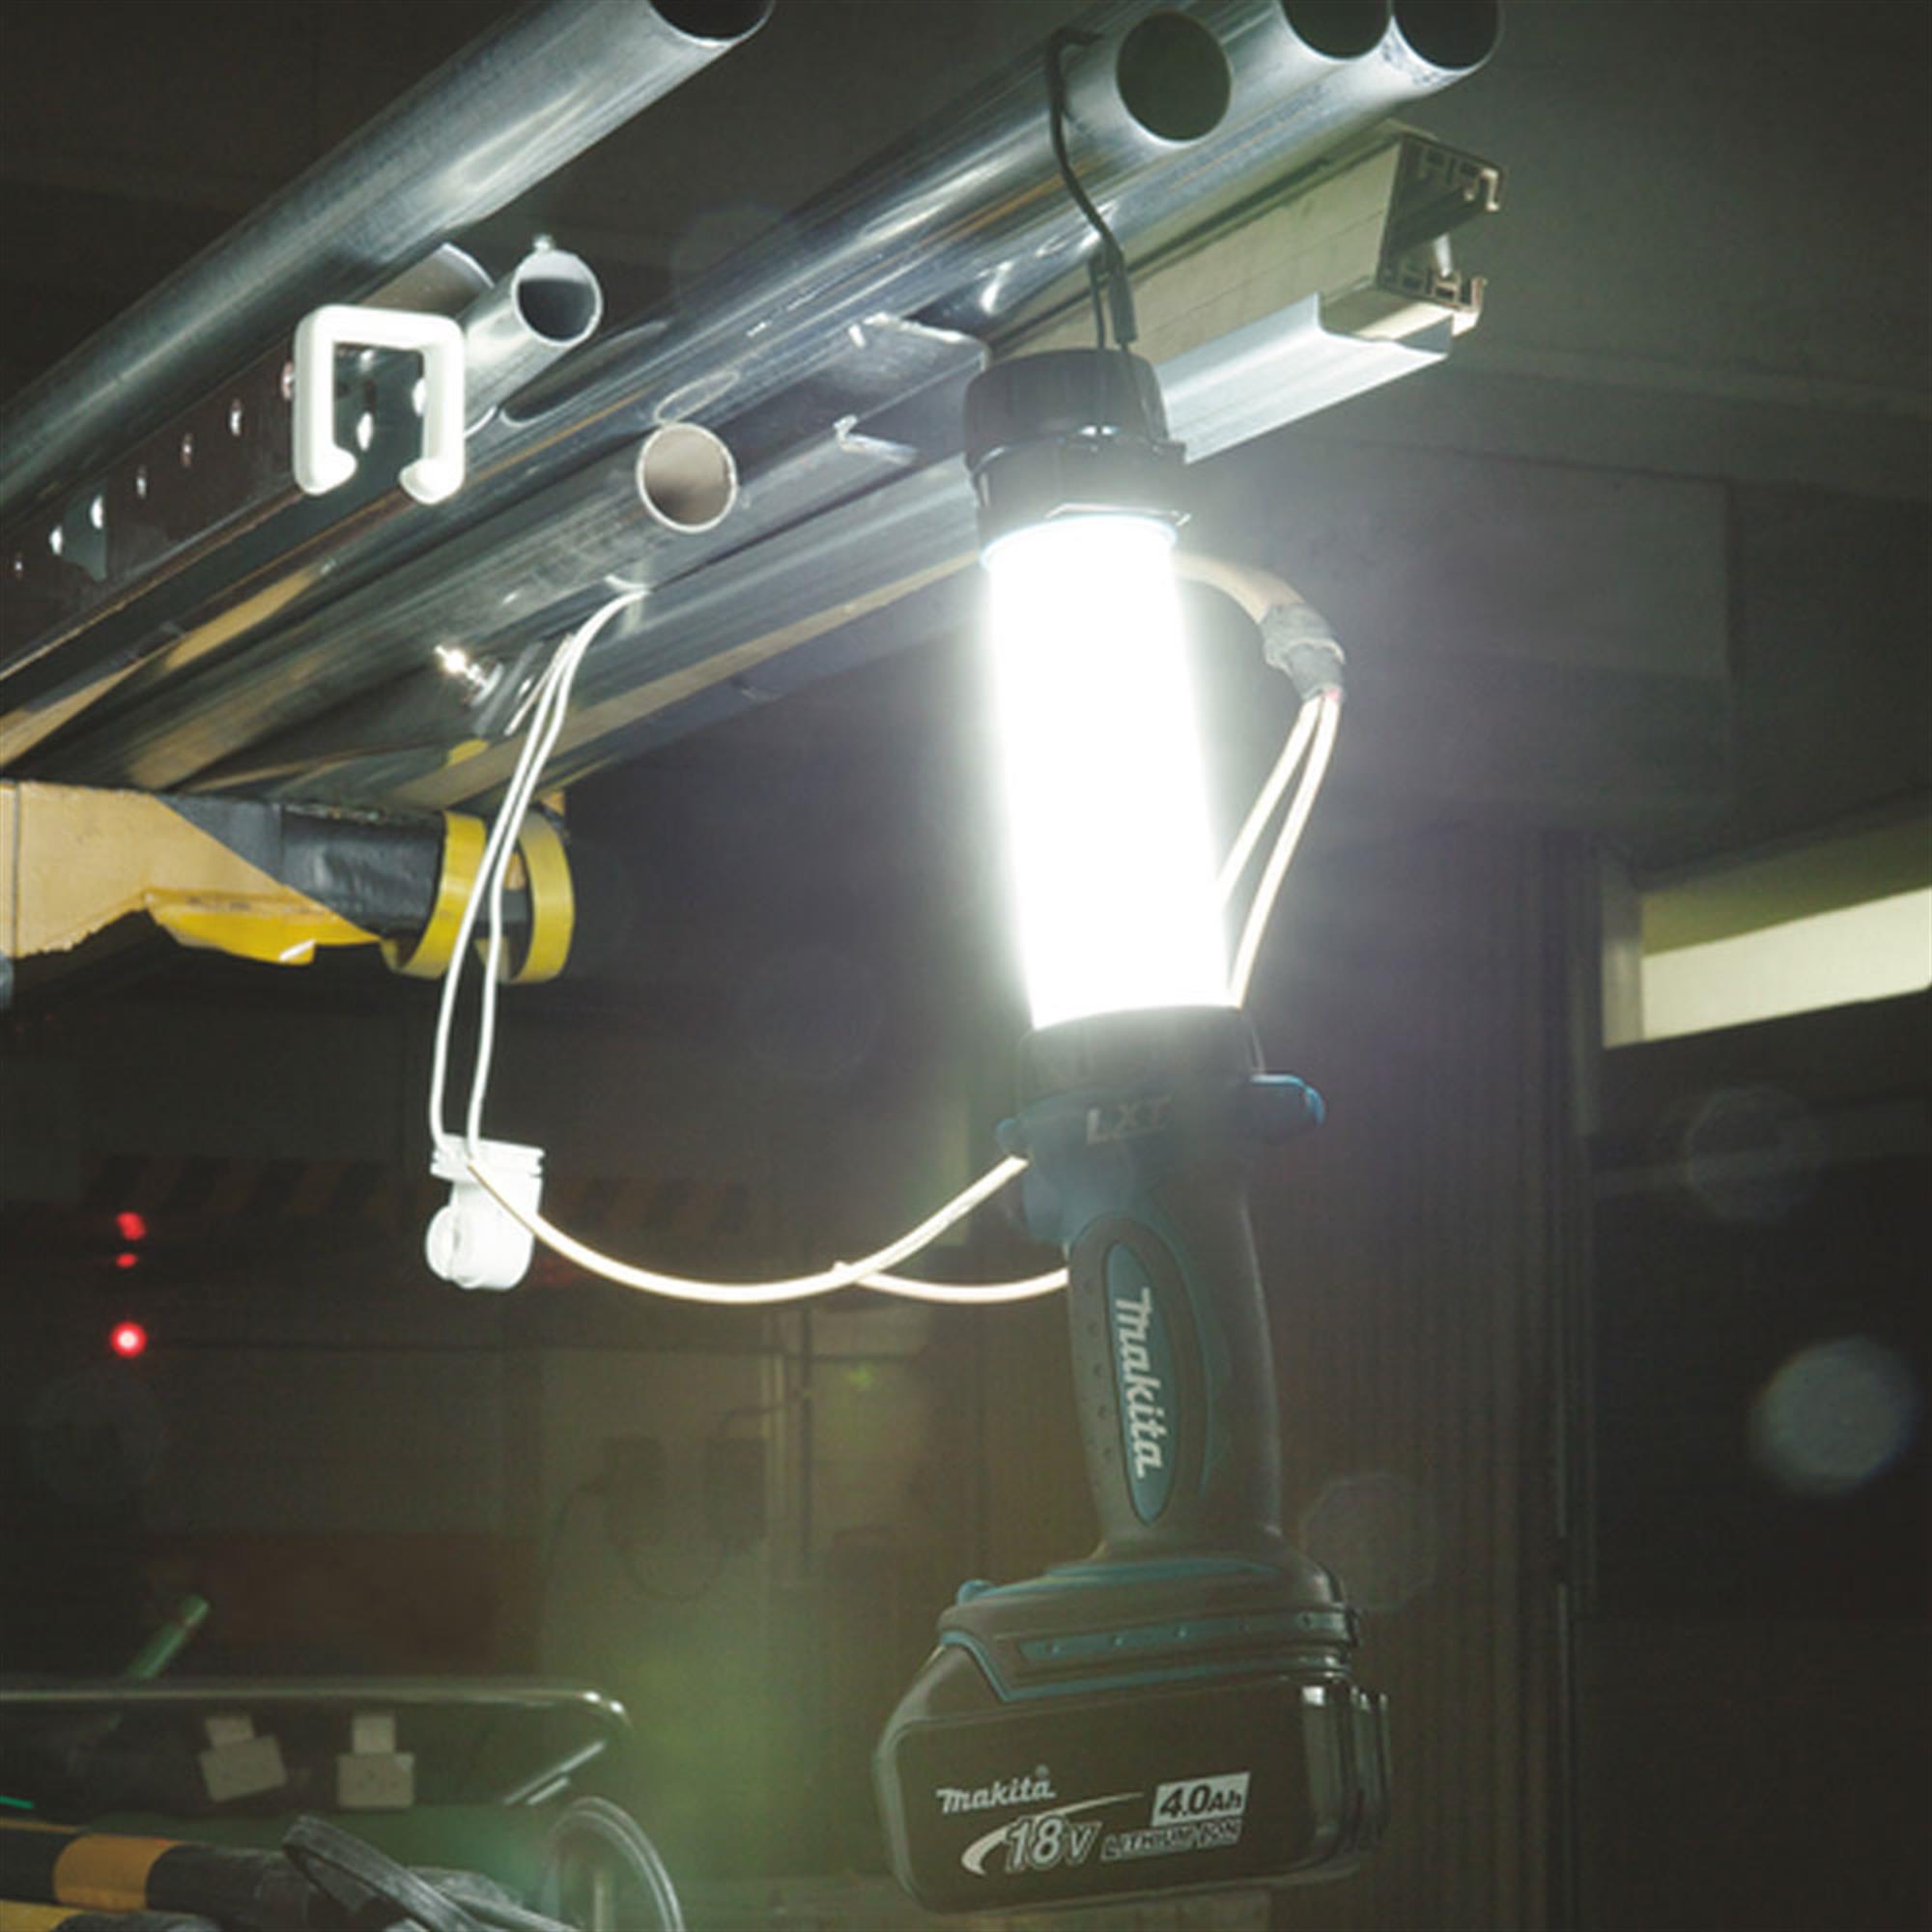 Makita akülü lamba DML806 DEADML806 pil / şarj cihazı olmadan LED çalışma  ışığı